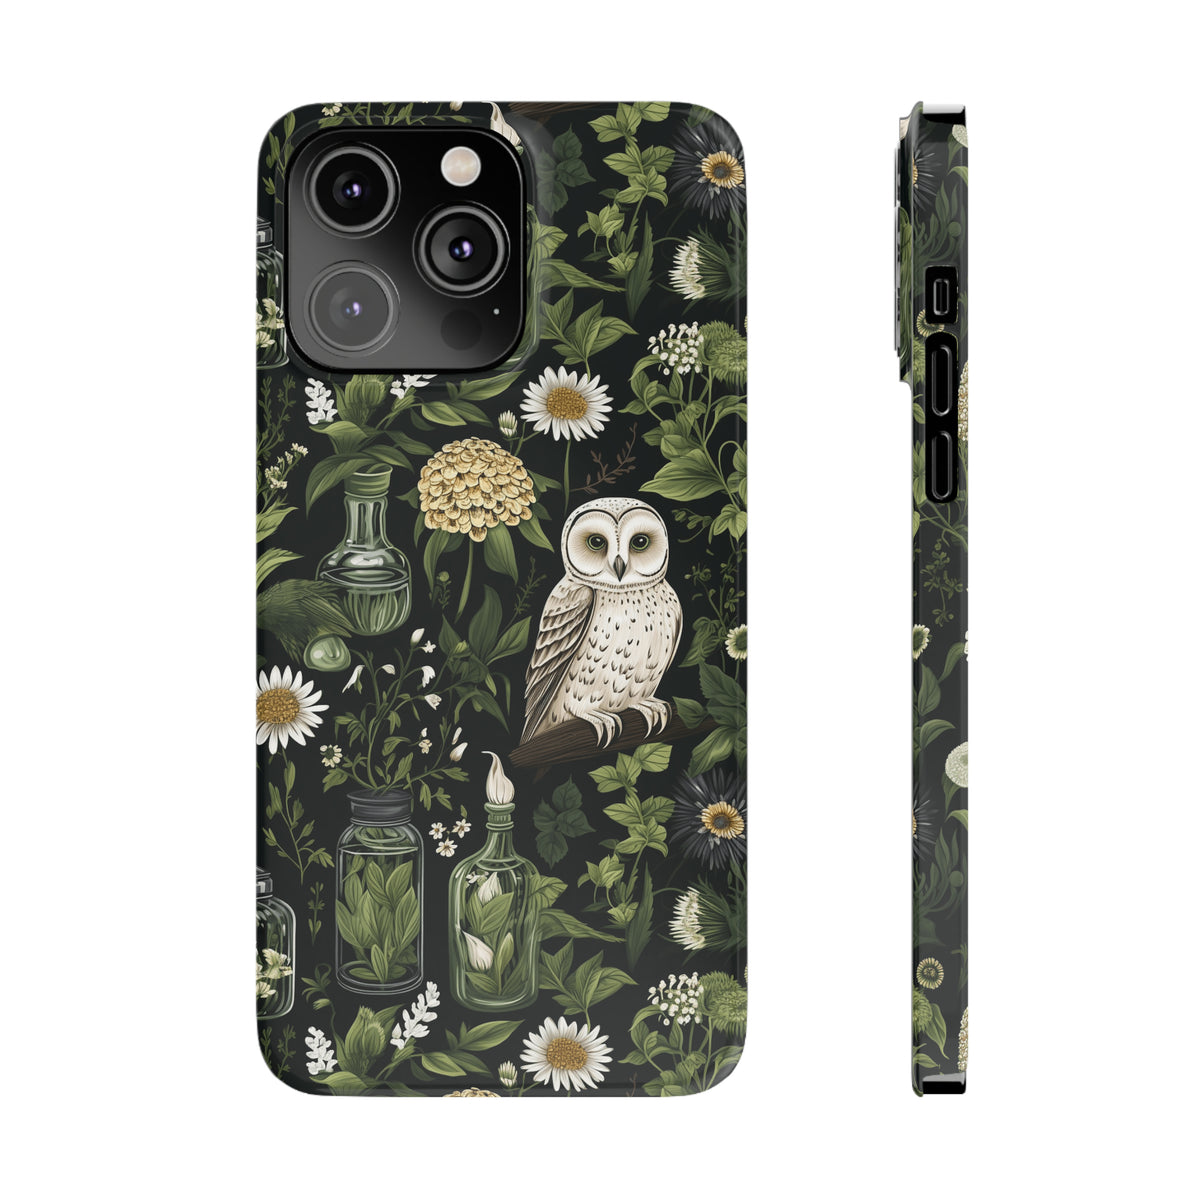 Vintage Owl, Floral Books, Wizard Phone Case